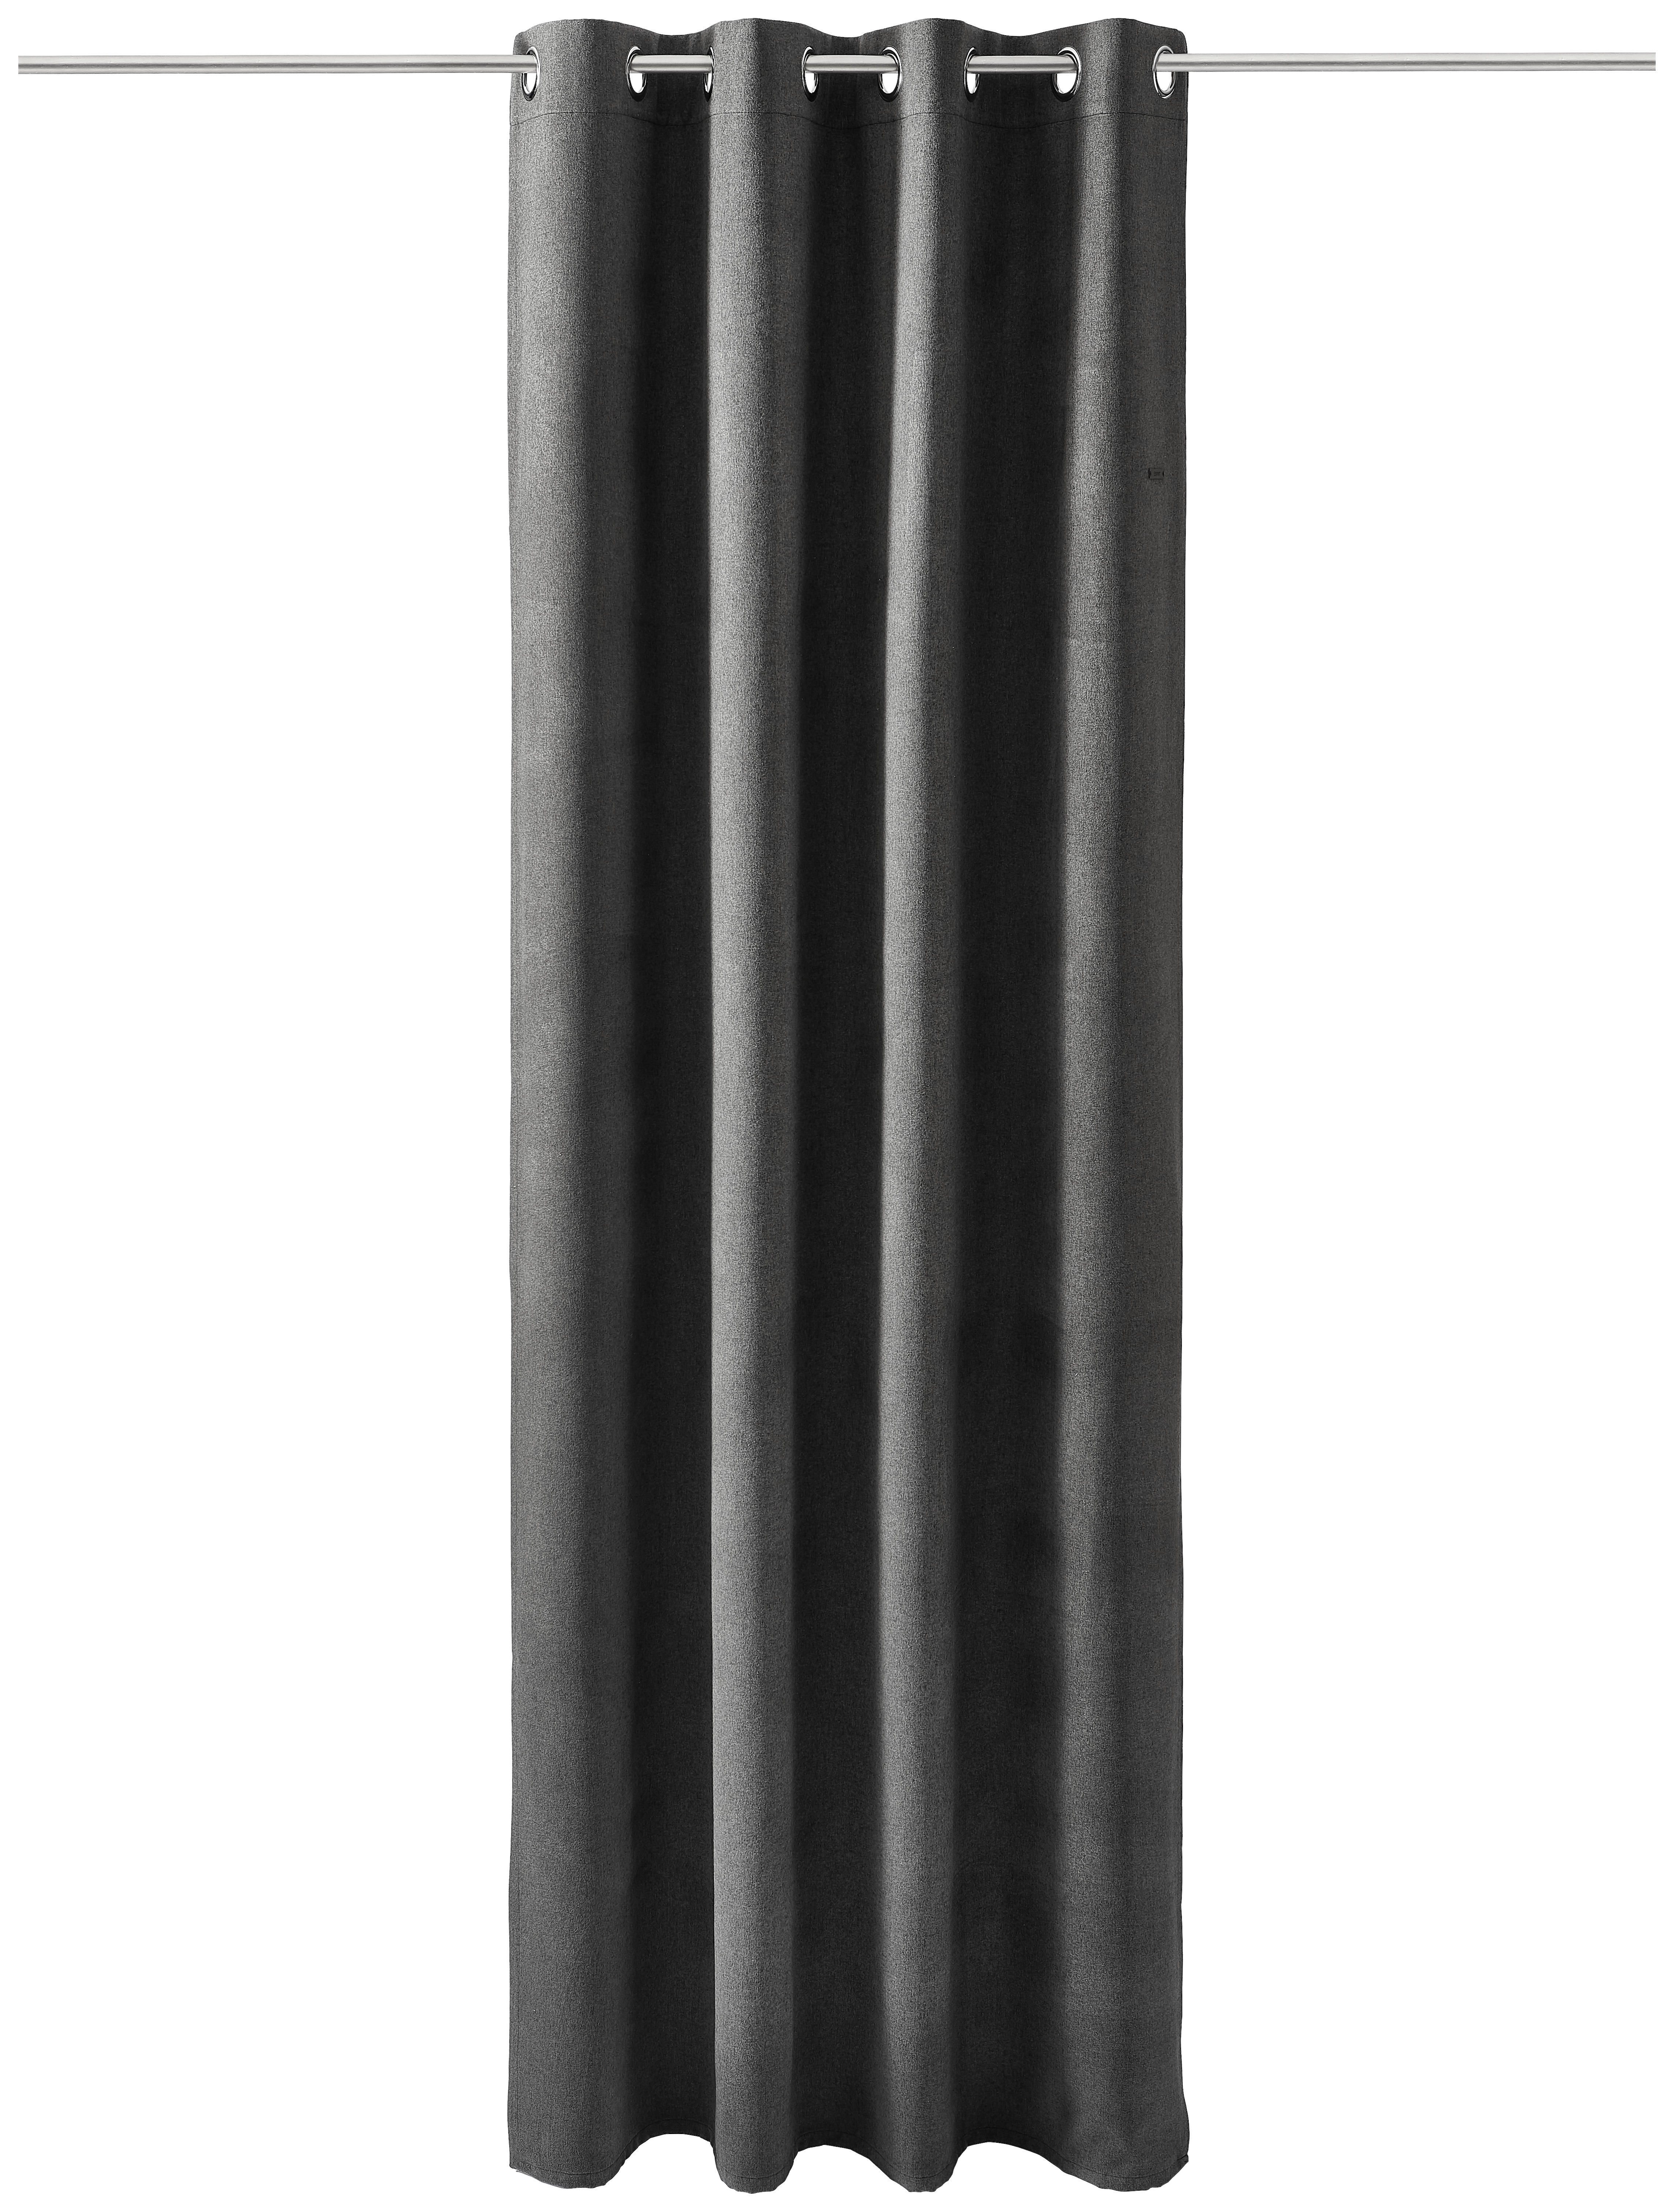 ÖSENSCHAL E-Harp blickdicht 140/250 cm   - Dunkelgrau, Basics, Textil (140/250cm) - Esprit